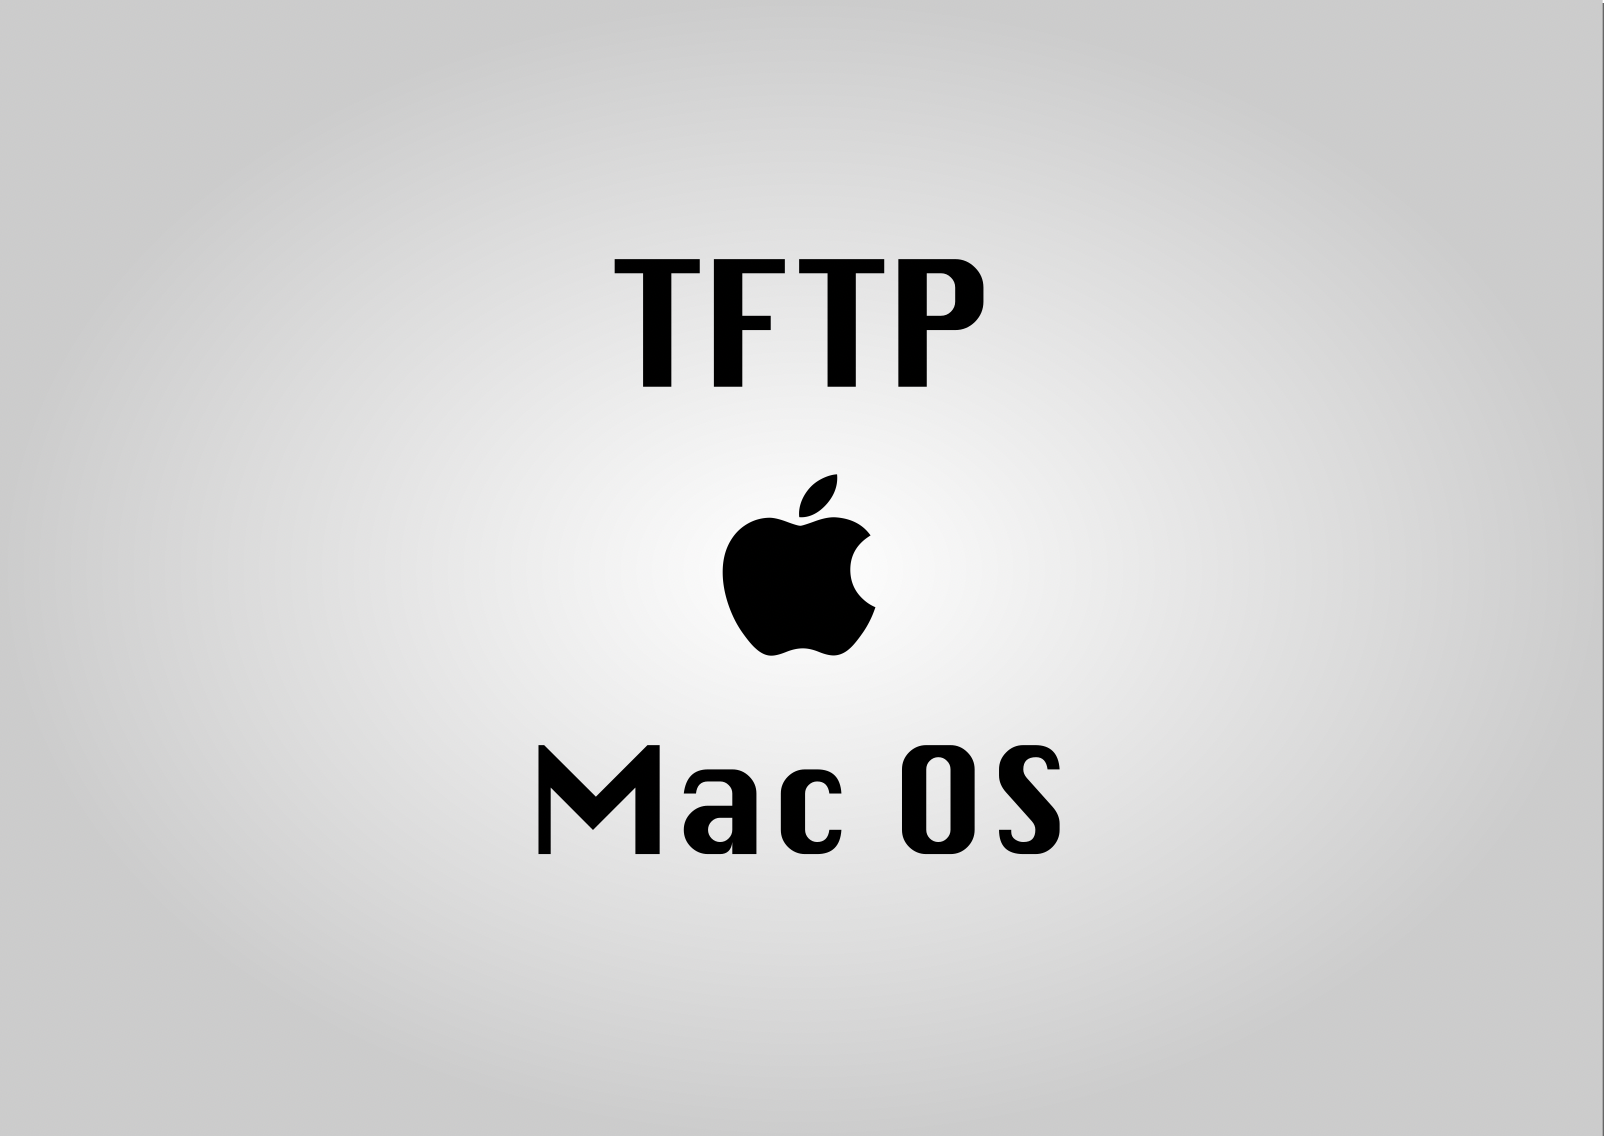 TFTP MacOS